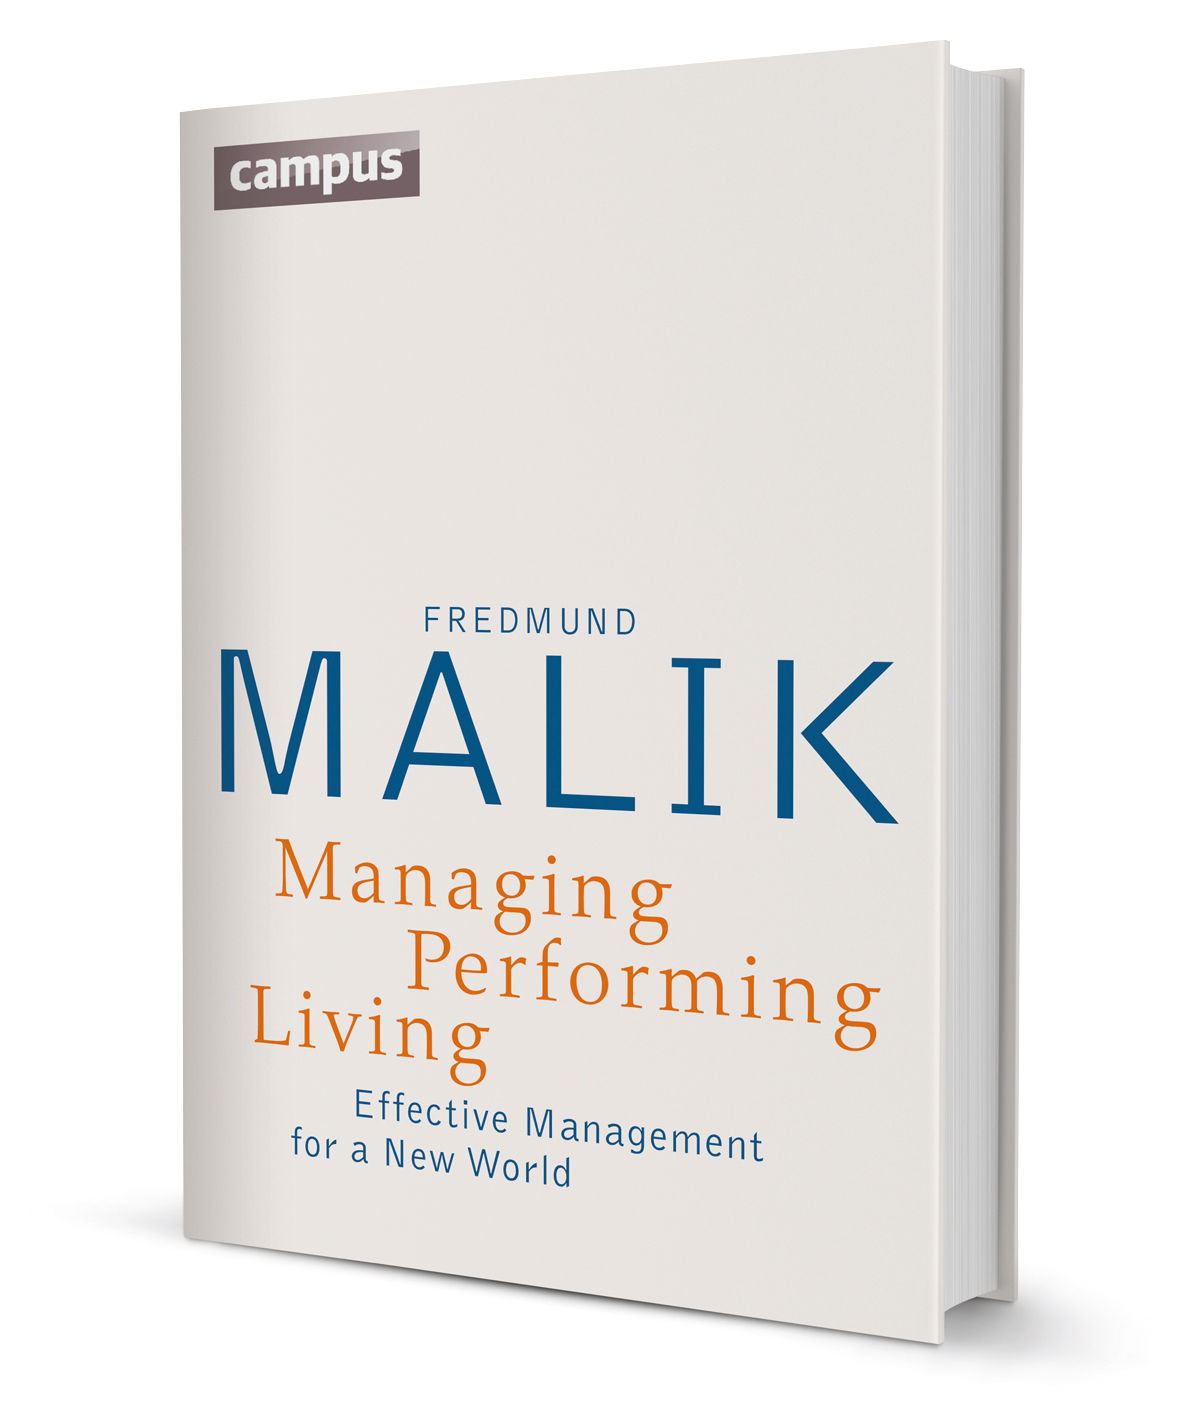 Managing Performing Living